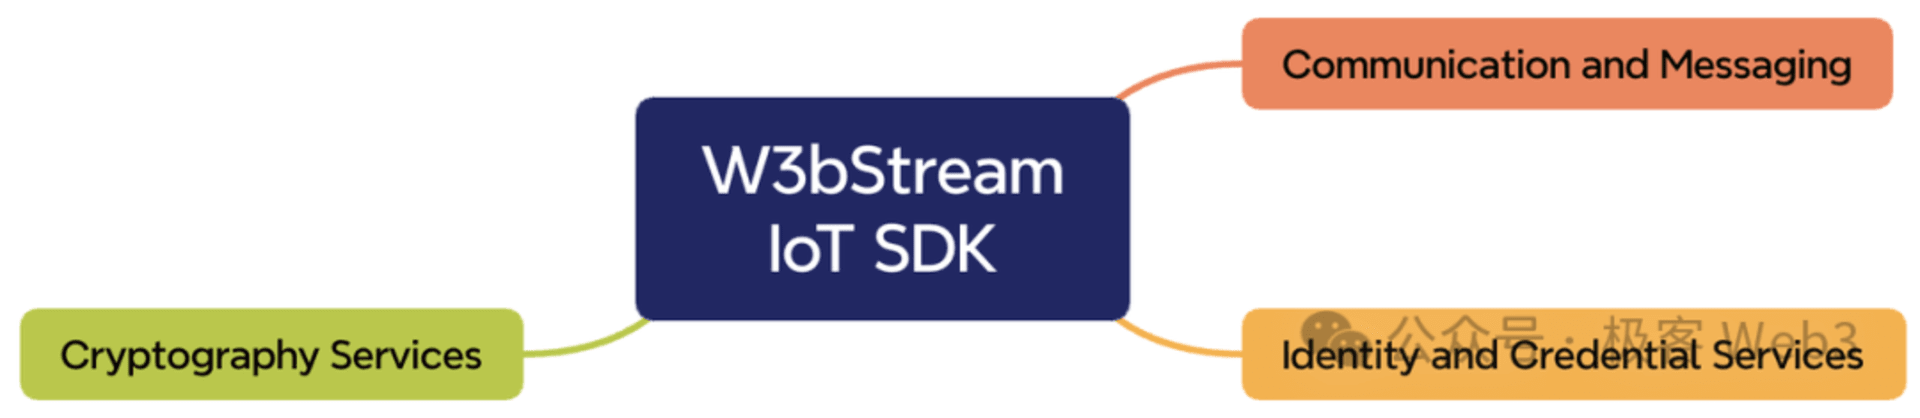 W3bStream IoT SDK